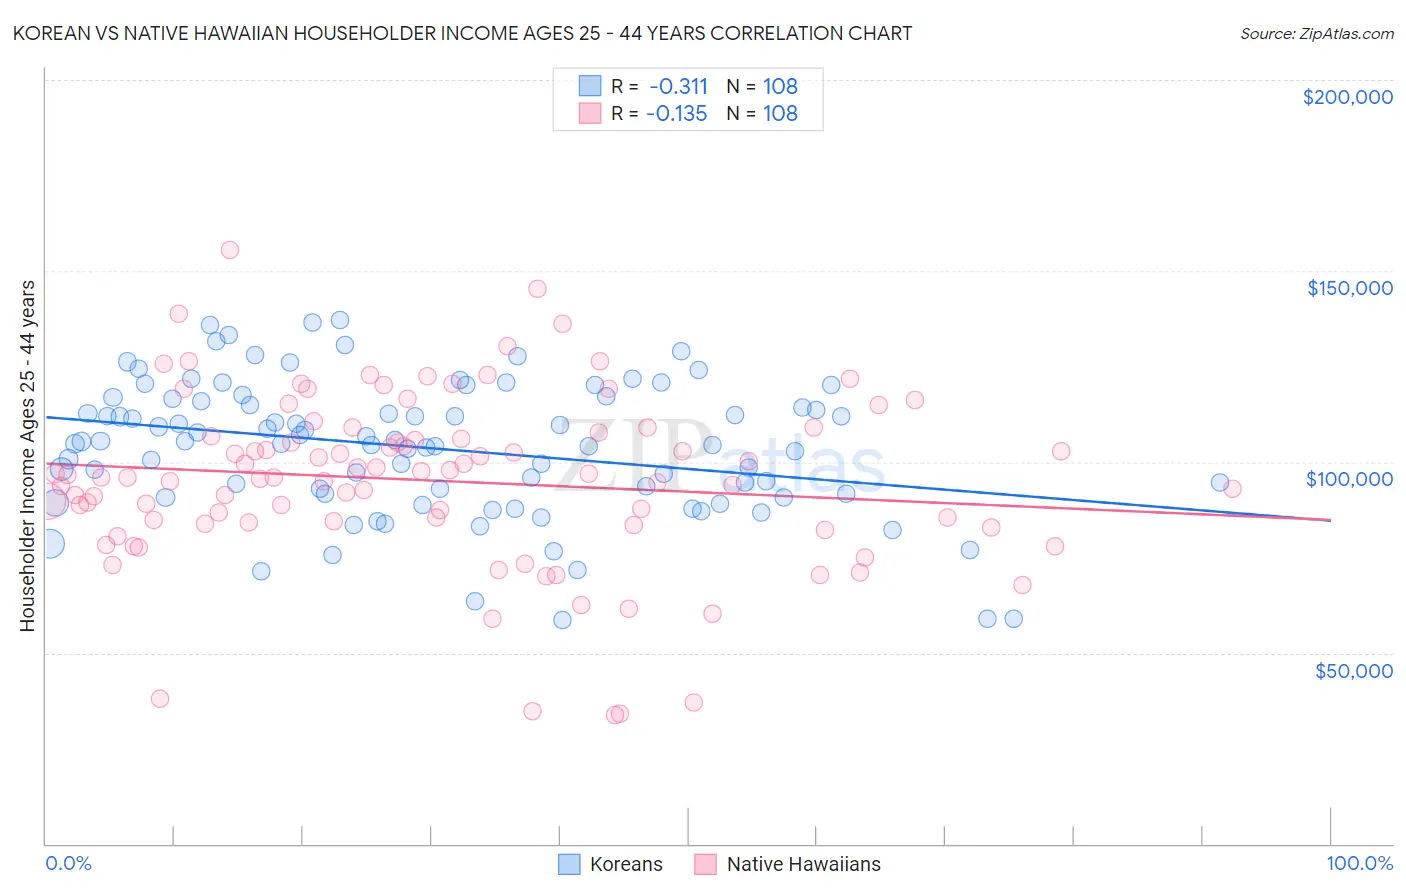 Korean vs Native Hawaiian Householder Income Ages 25 - 44 years